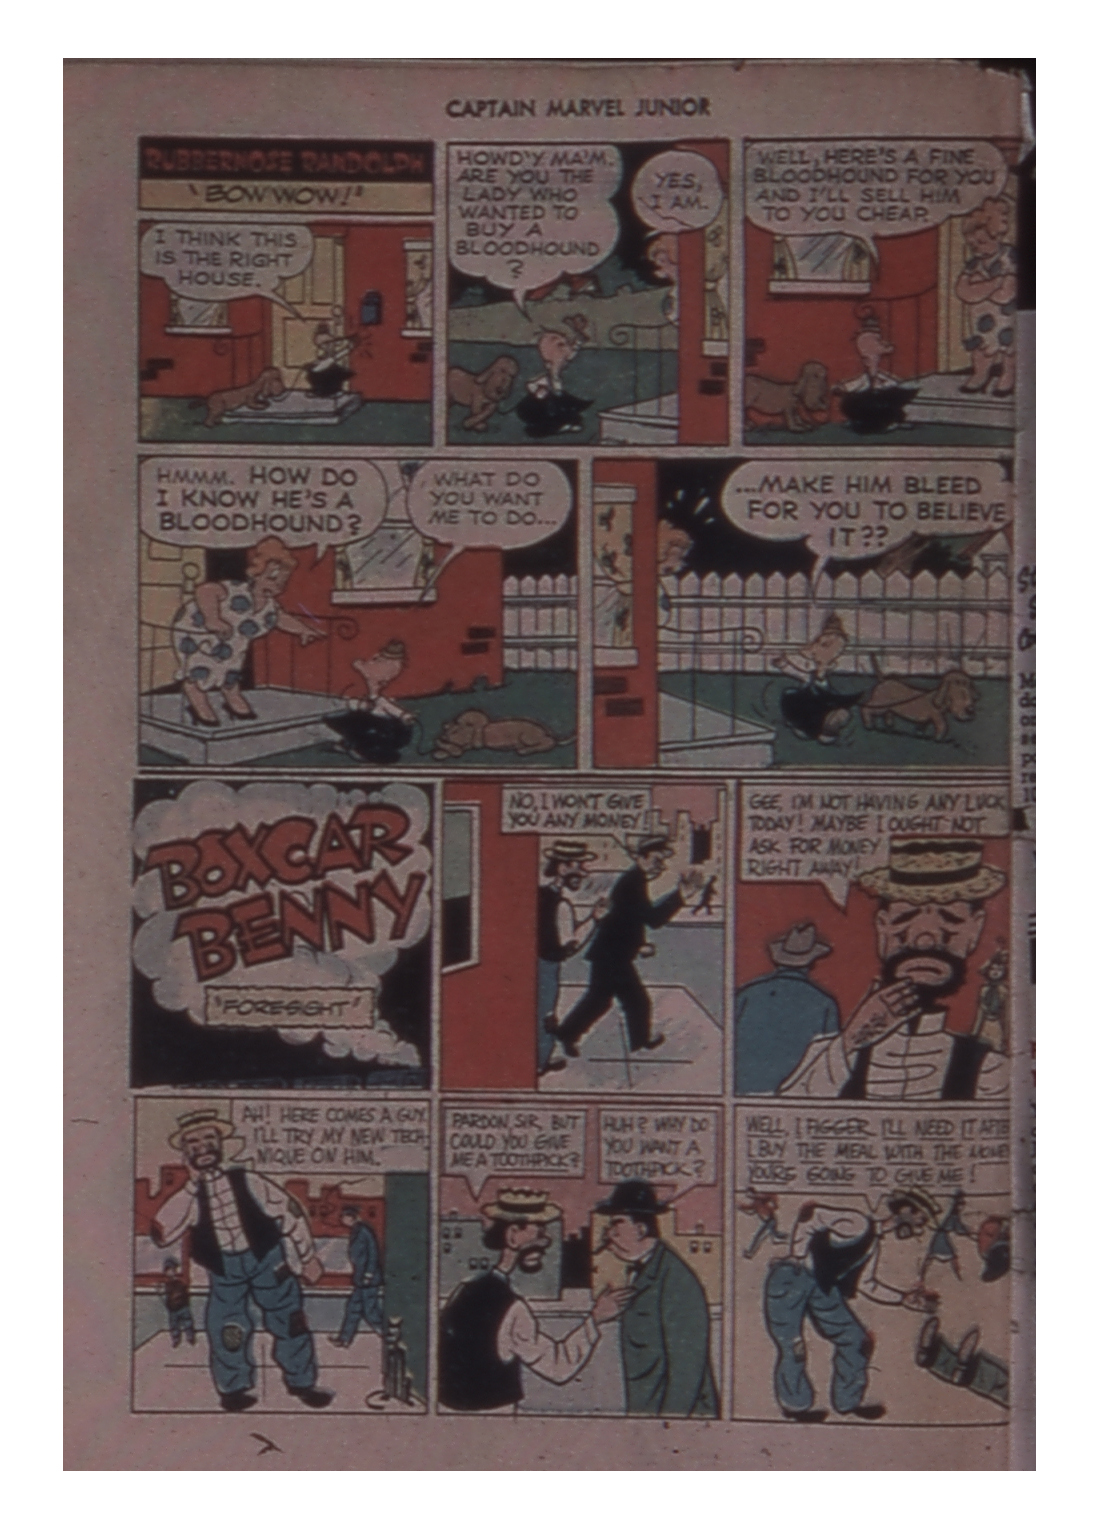 Read online Captain Marvel, Jr. comic -  Issue #65 - 50